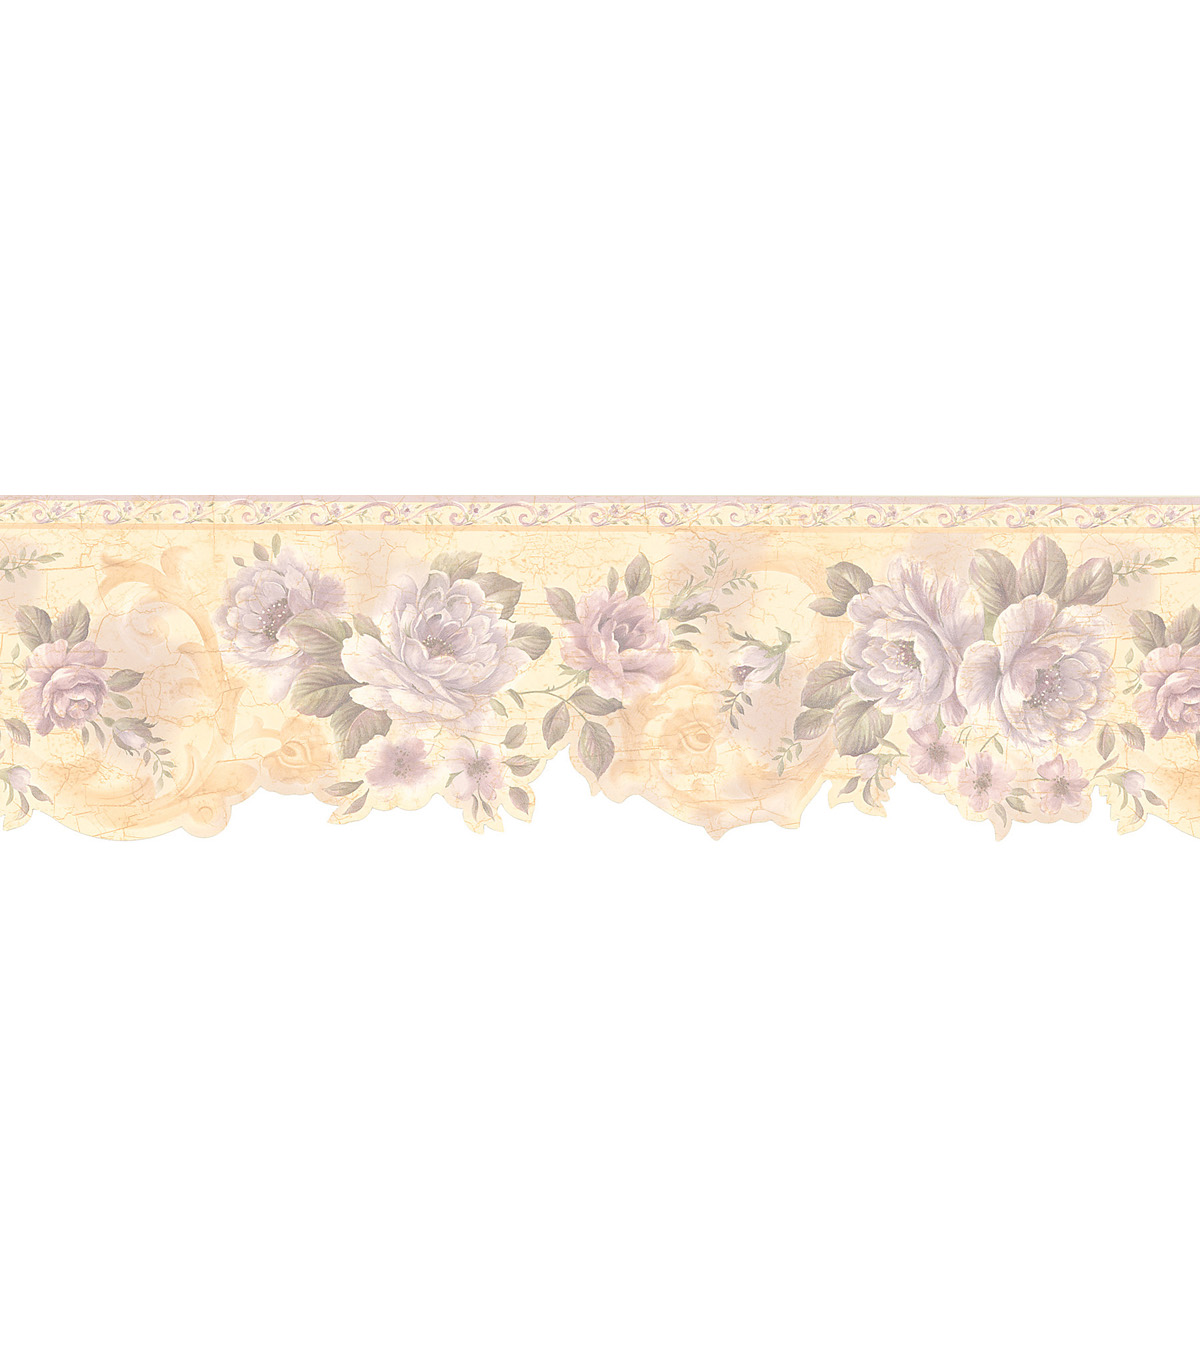 Die Cut Wallpaper Border Cream Sampleflower Scroll